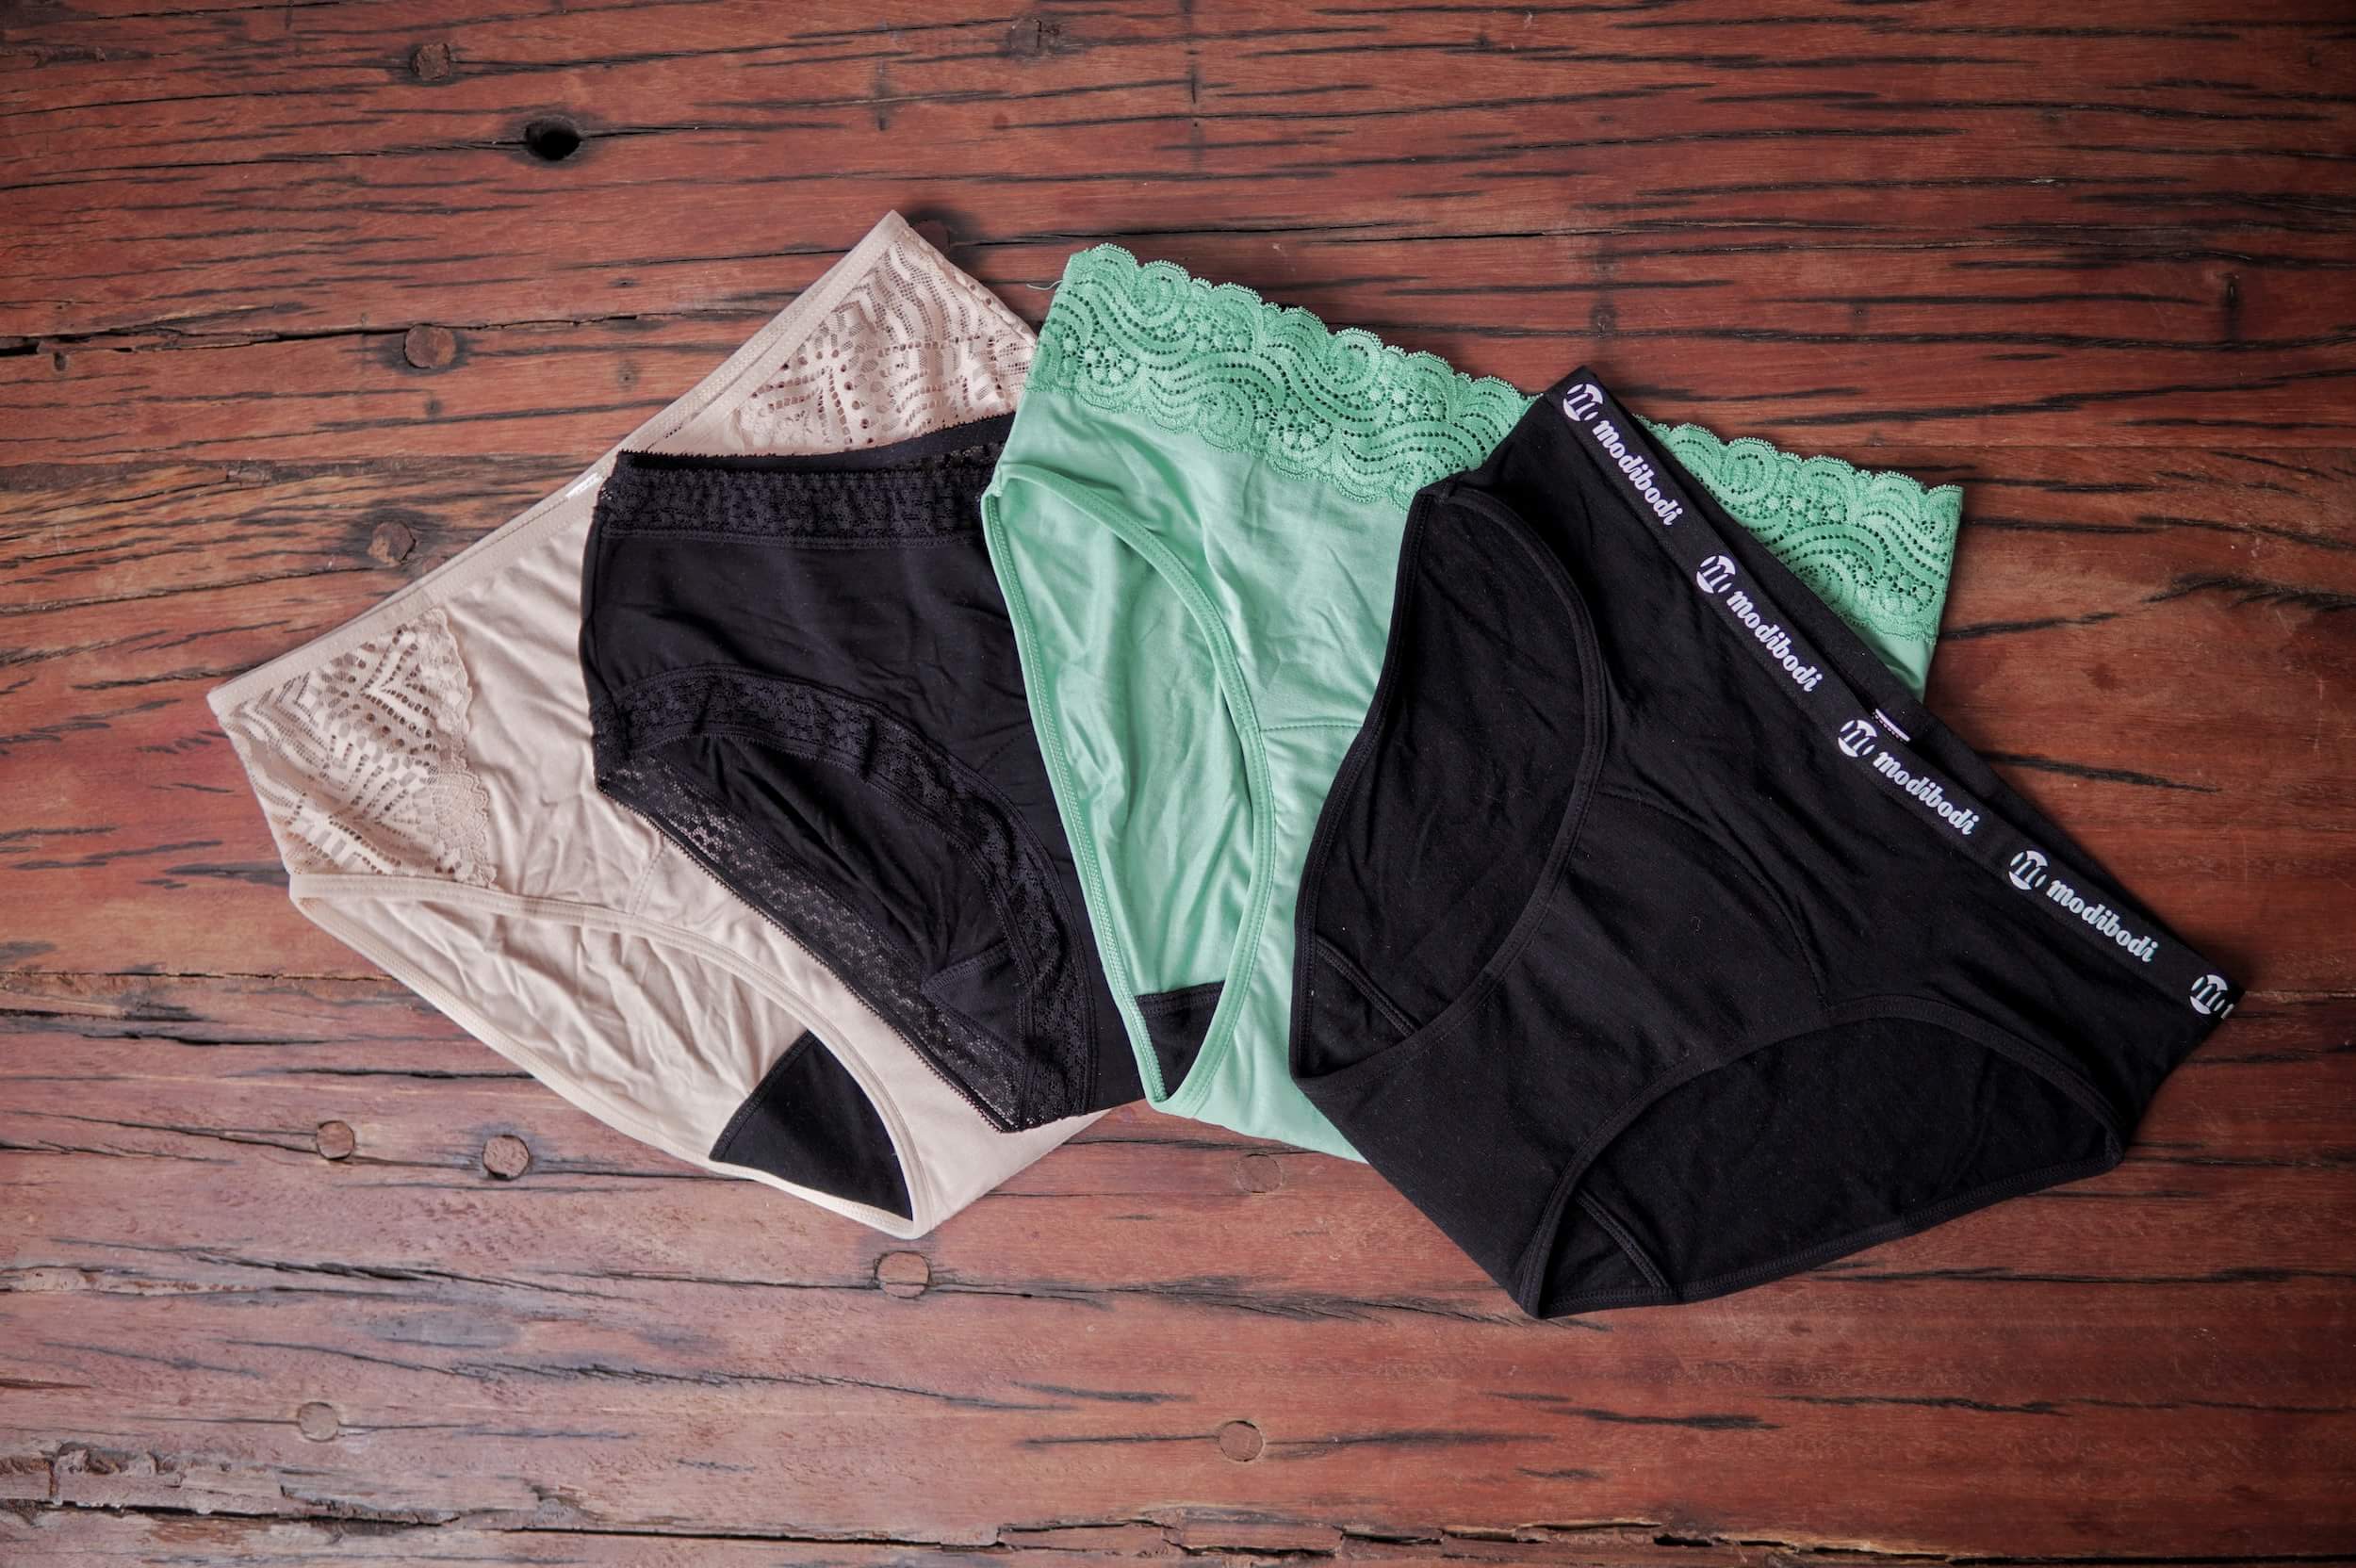 Product test: Period underwear from Modibodi - Vulvani